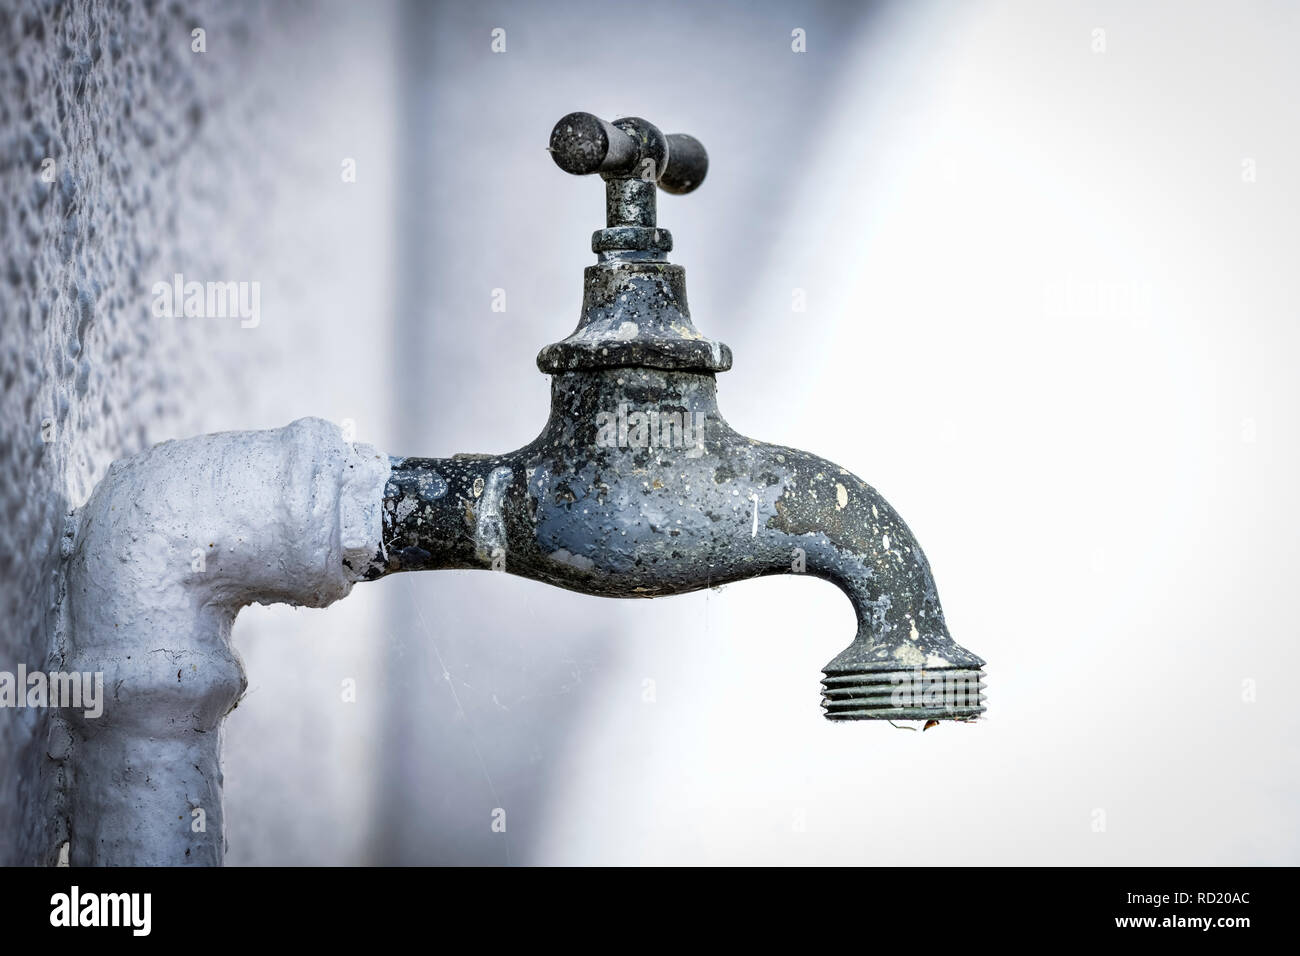 Old tap, Alter Wasserhahn Stock Photo